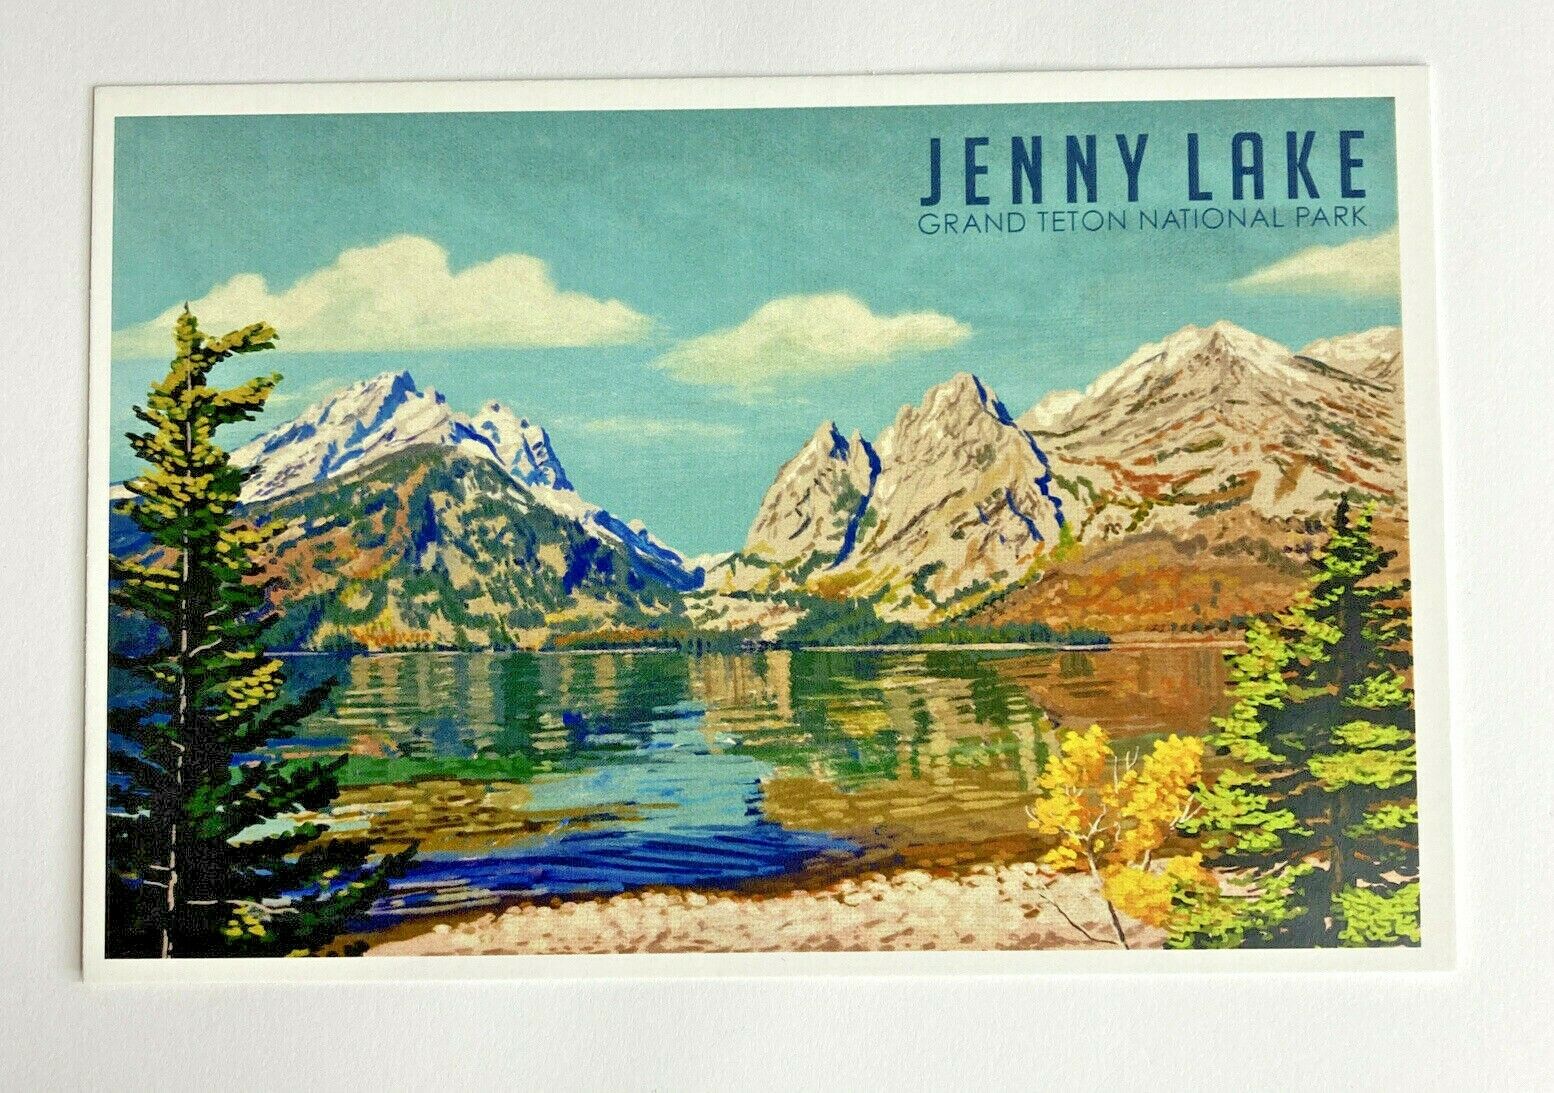 Jenny Lake Grant Teton National Park Lantern Press Postcard (e214)